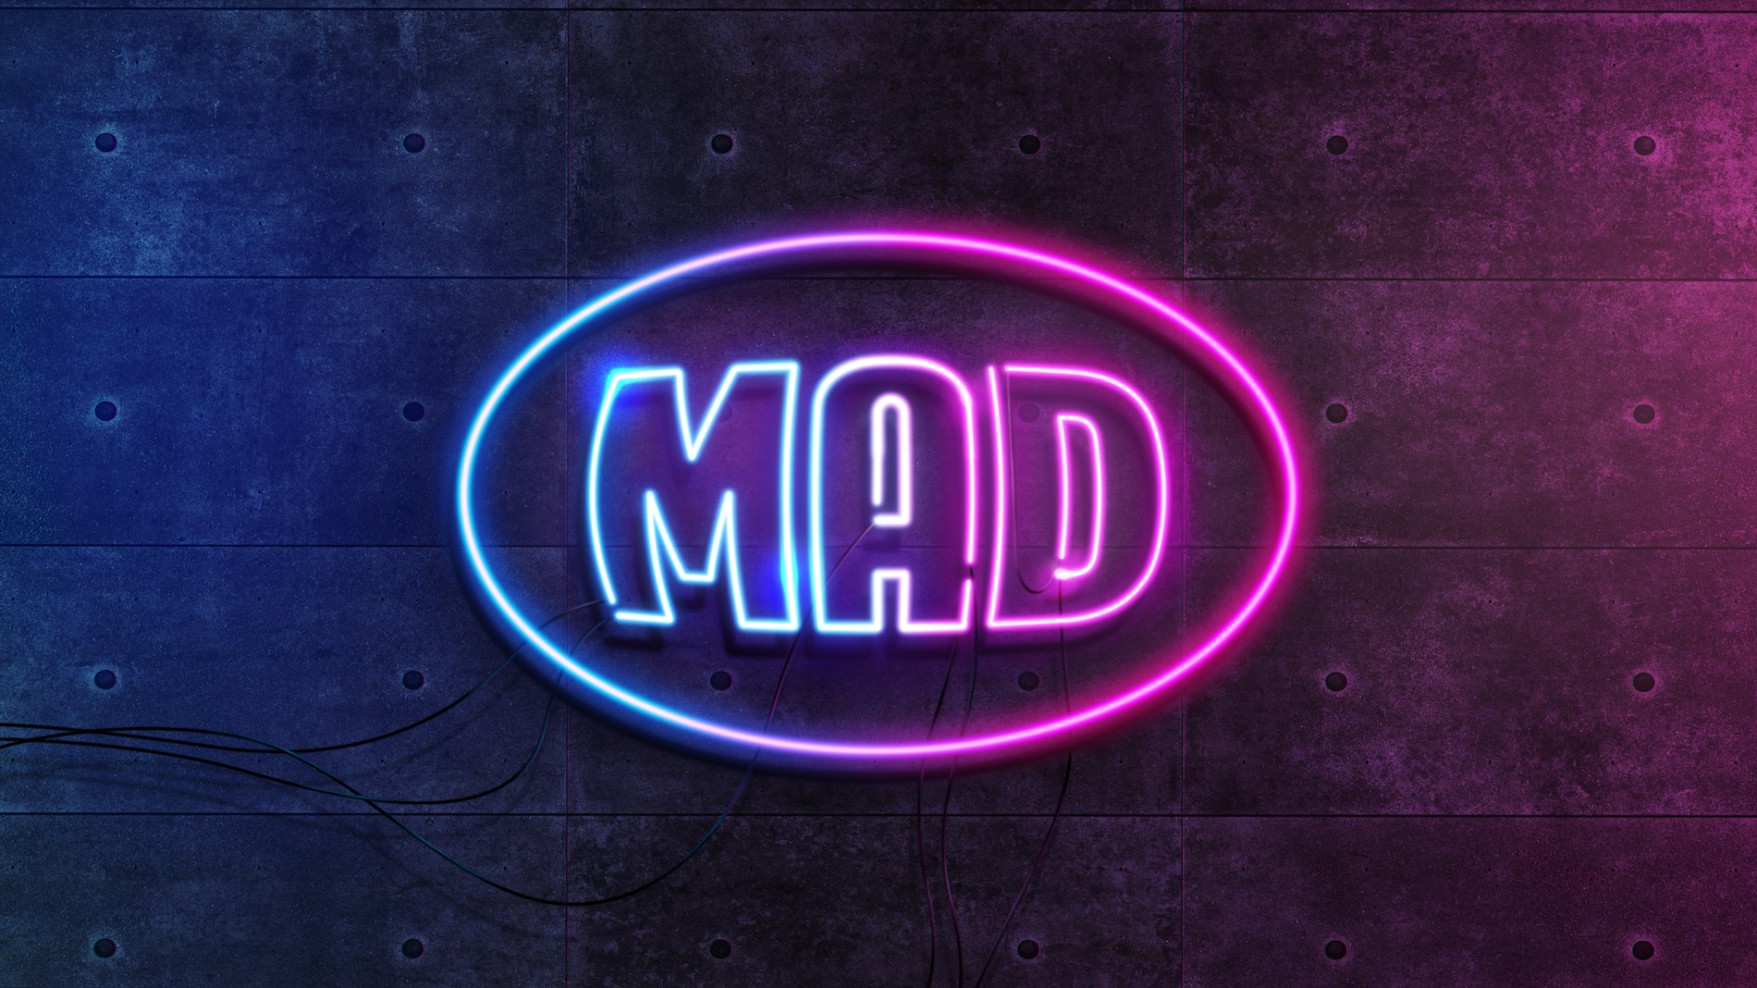  mad-image-8-Ep1Qx